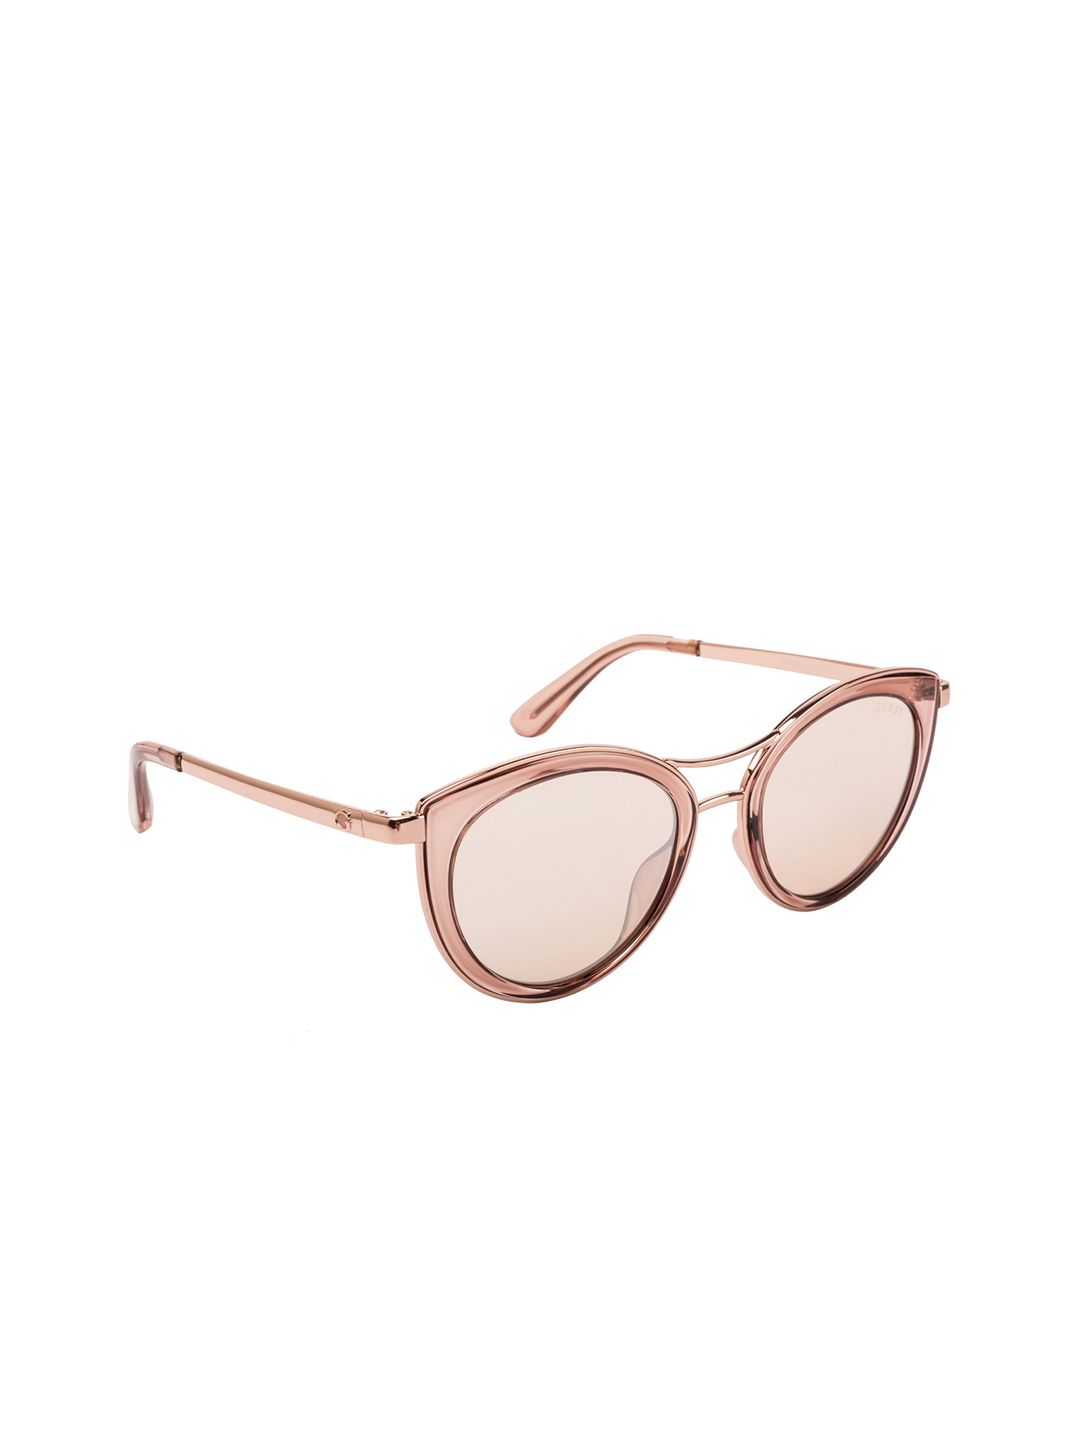 GUESS Women Oval Sunglasses GU7490 51 45G Price in India